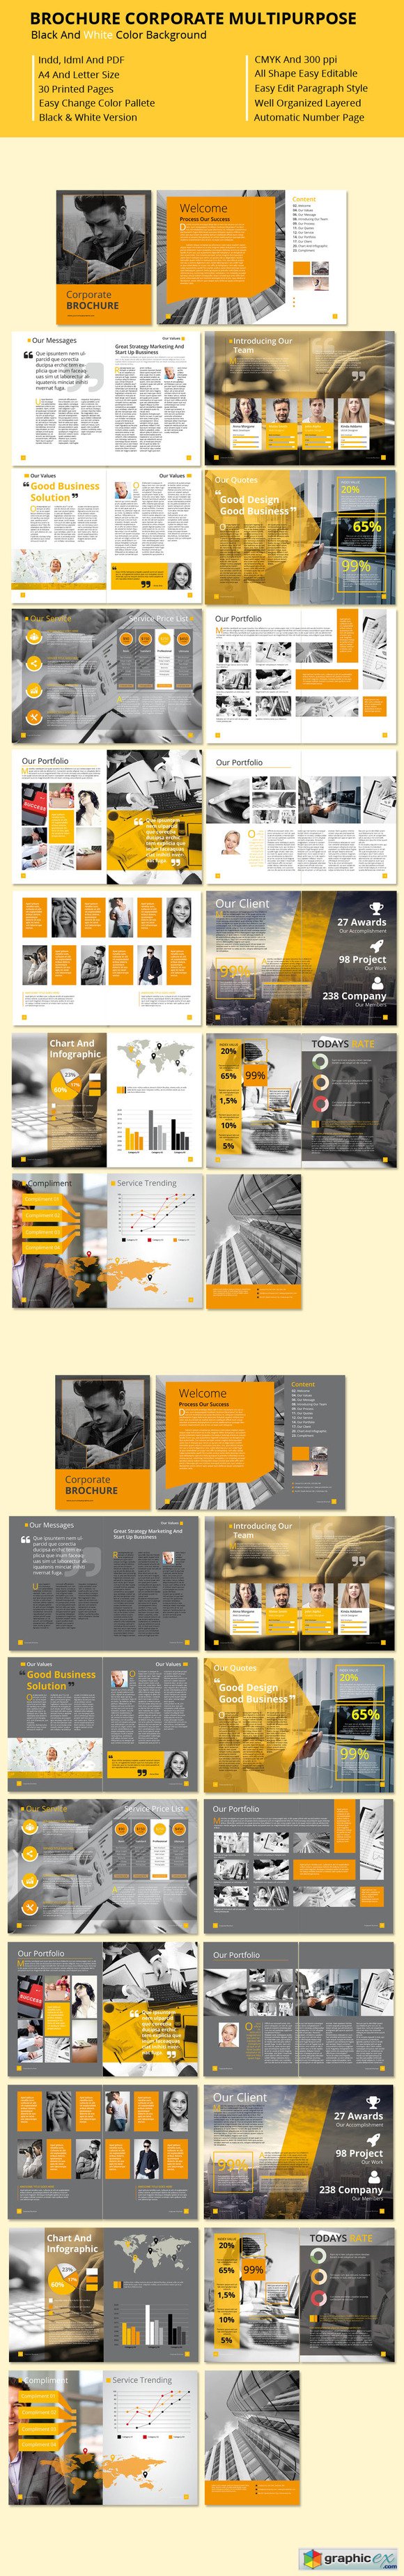 Brochure Corporate Multipurpose